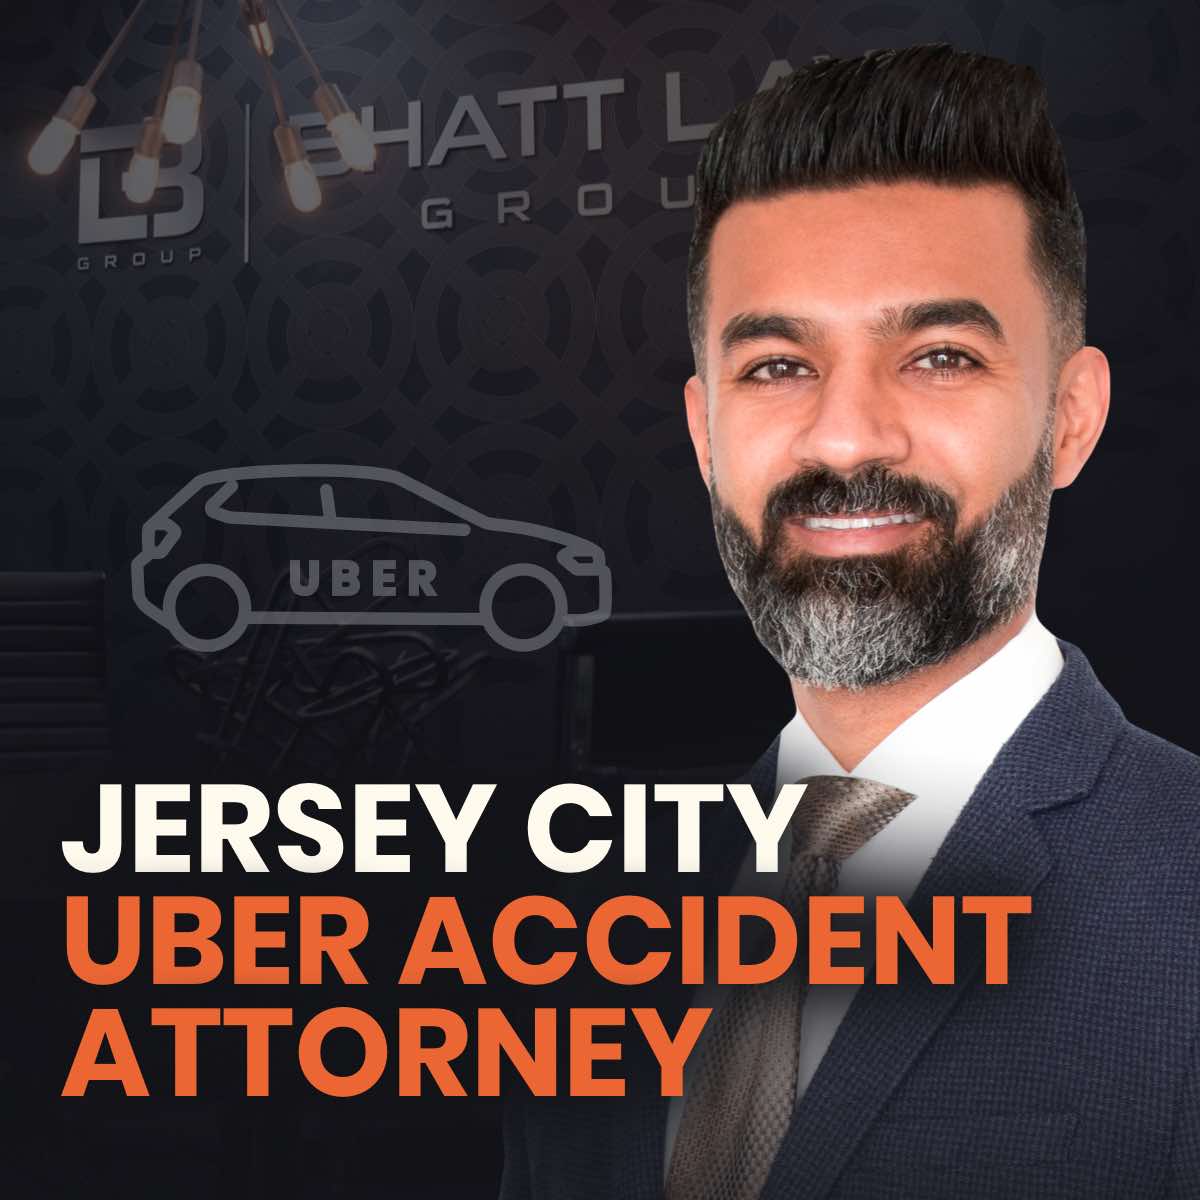 City Accident - Bhatt Law Group